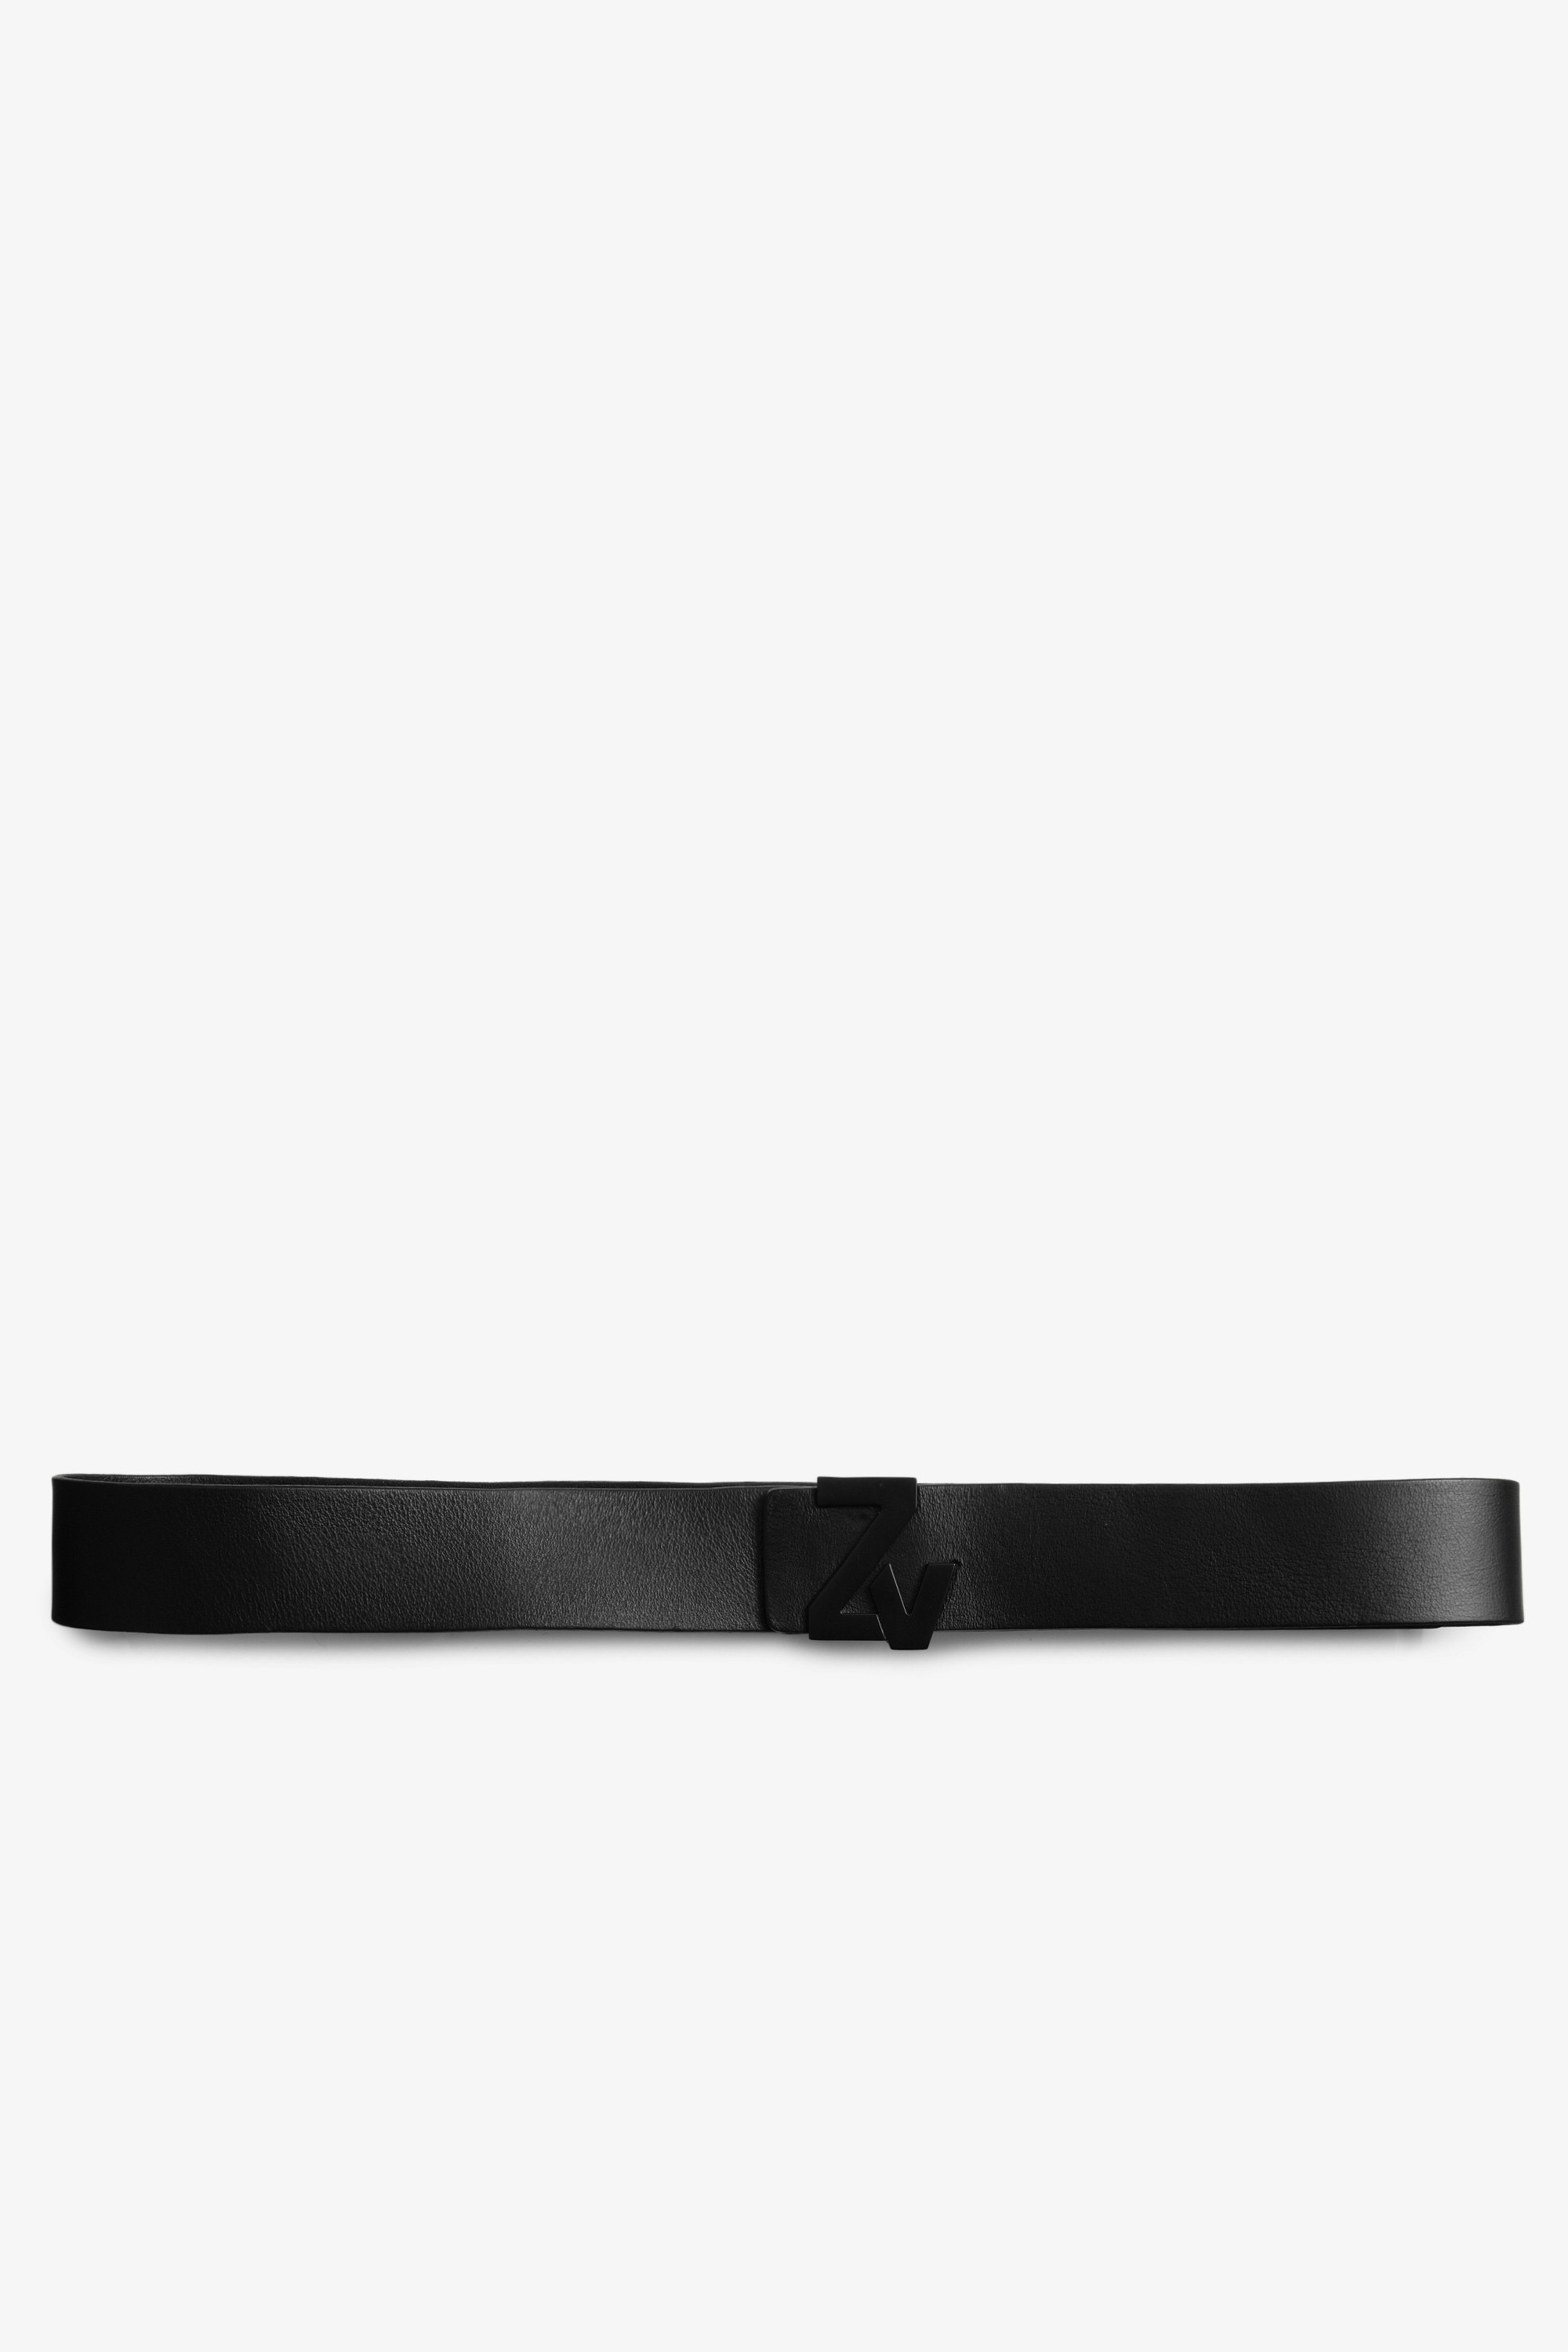 ZV Initiale La Belt Men's black leather belt with ZV buckle